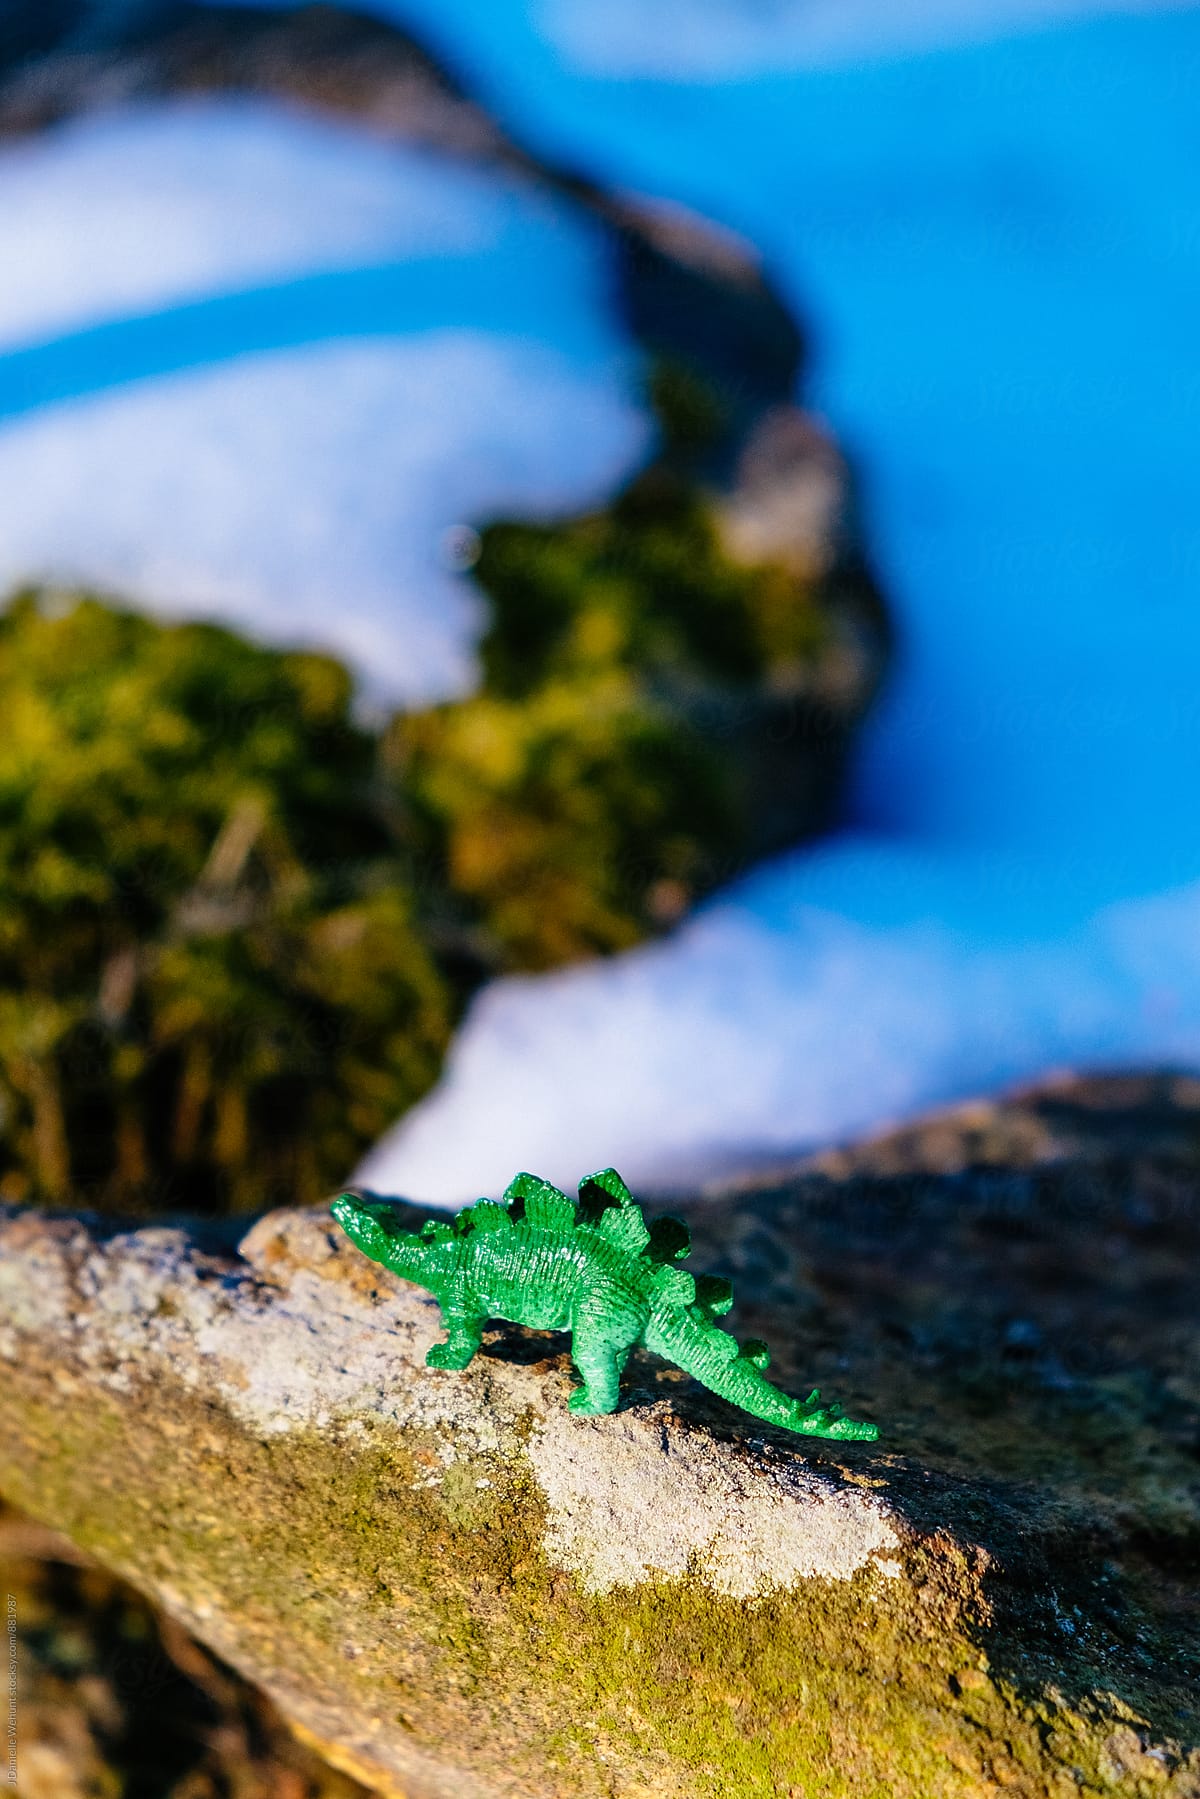 A miniature plastic dinosaur roaming in the snow.